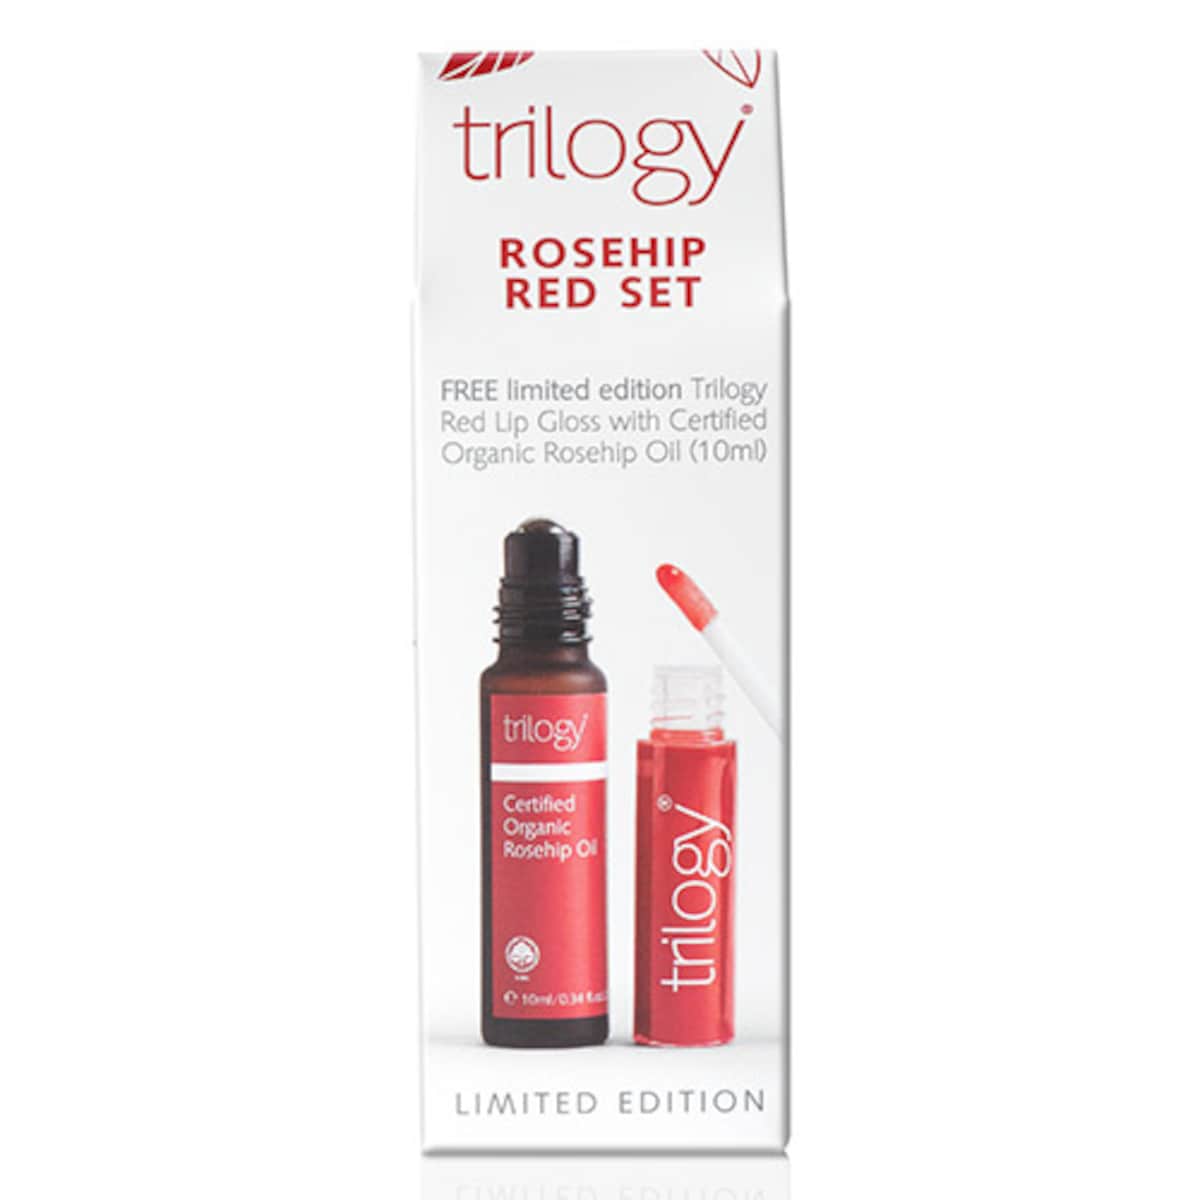 Trilogy Rosehip Red Gift Set